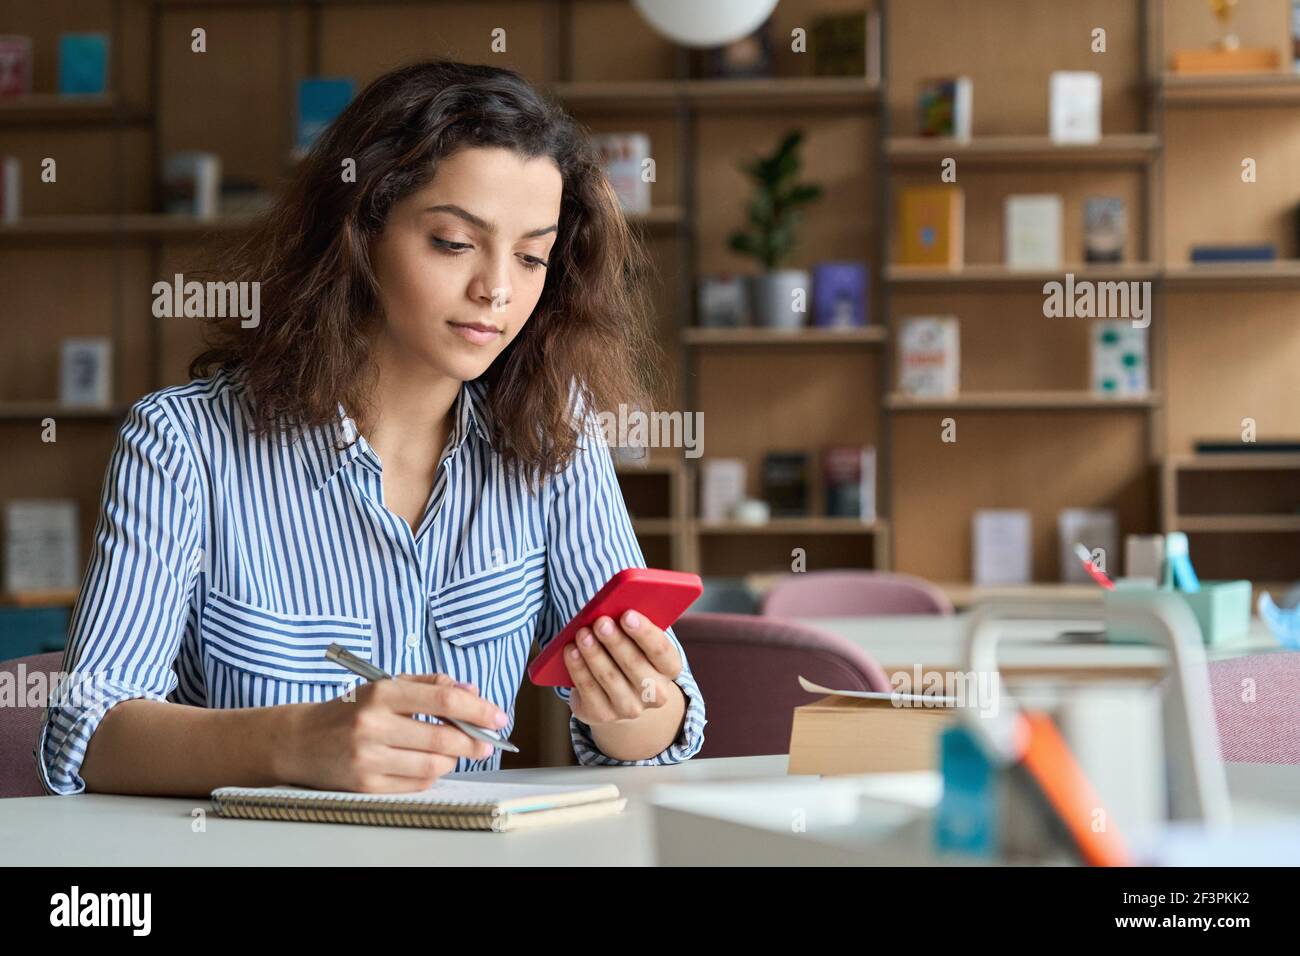 Hispanic latin girl college student holding smartphone studying in university. Stock Photo